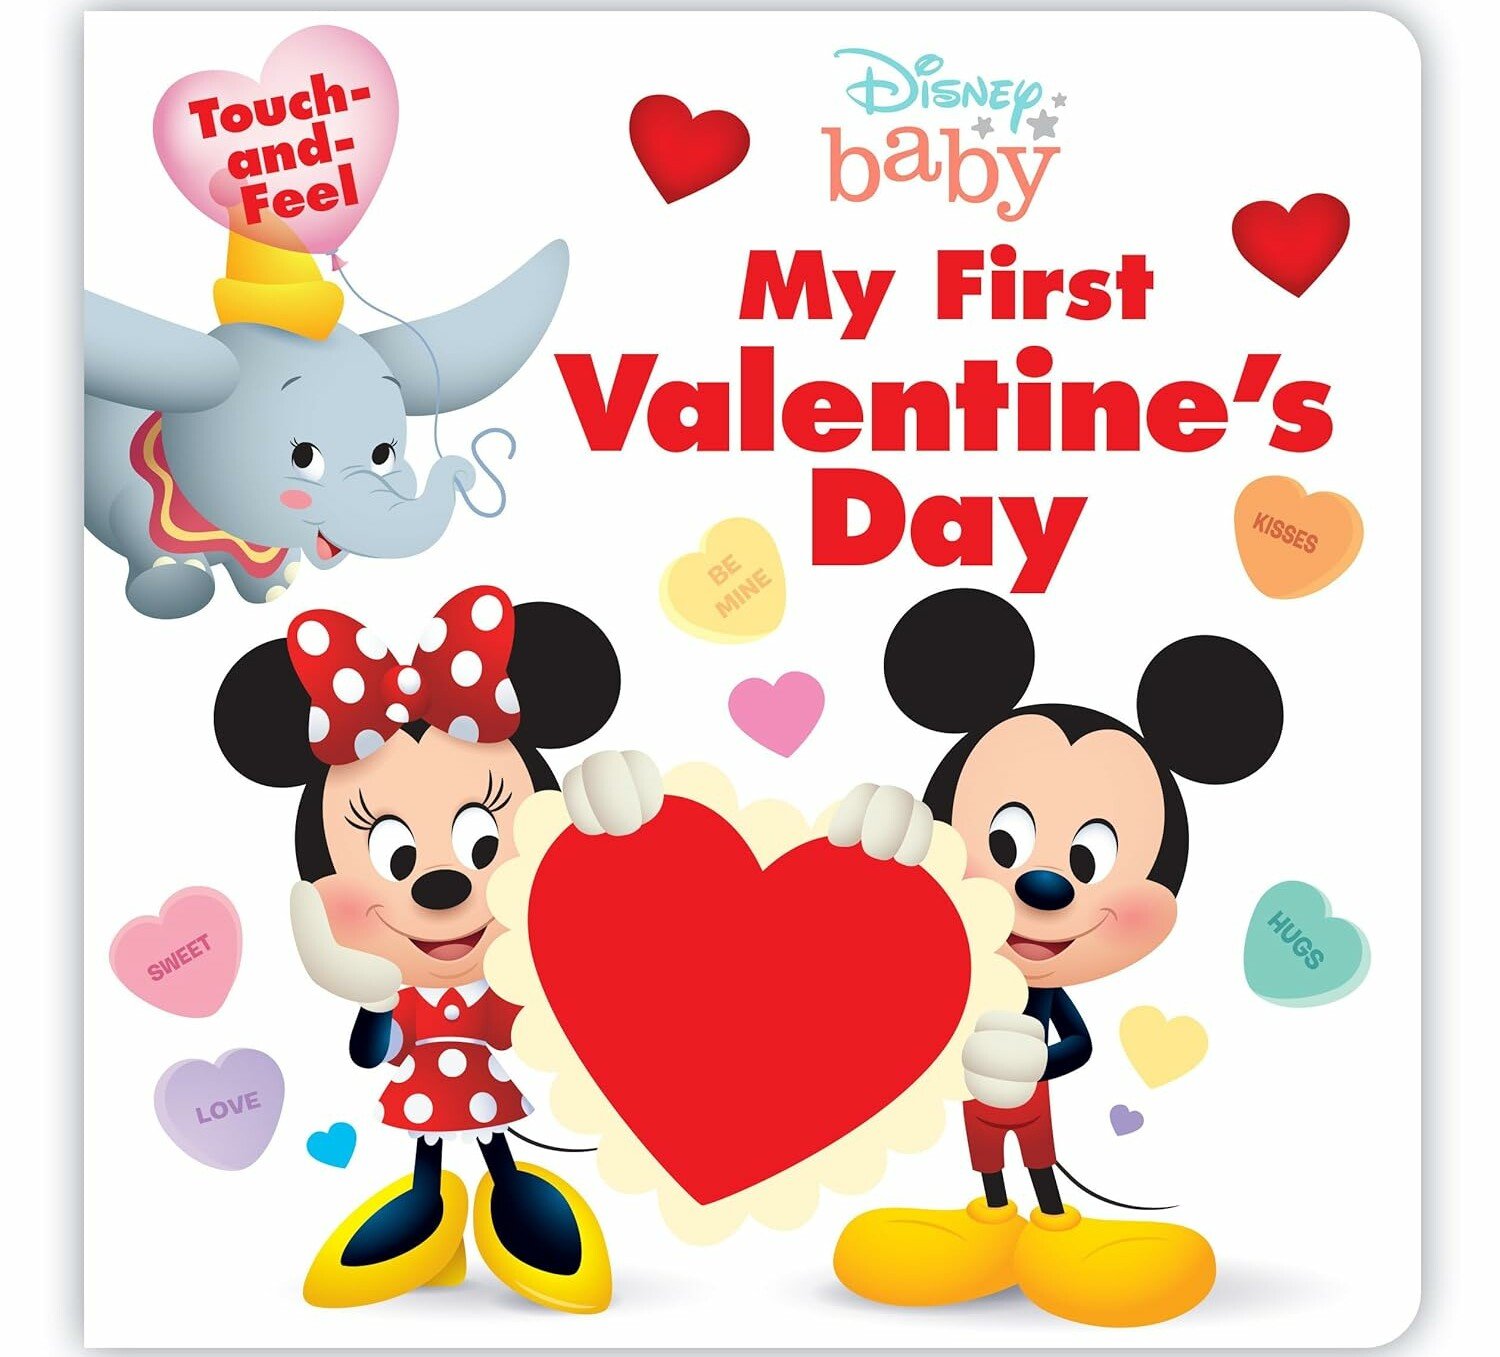 "Disney Baby: My First Valentine's Day" by Disney Books